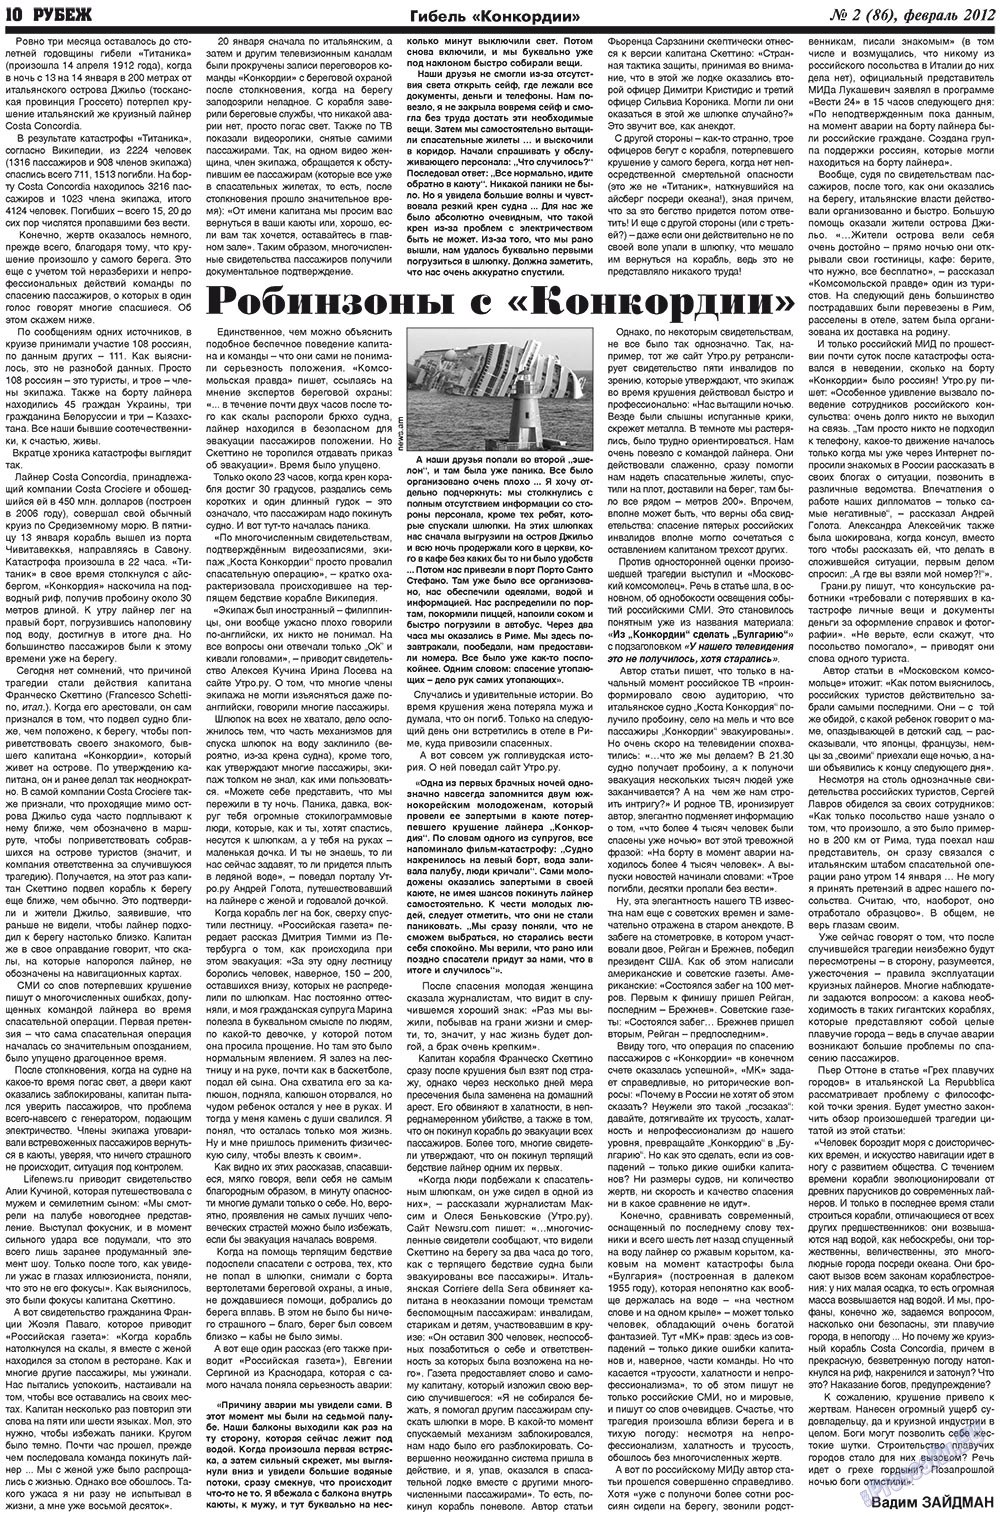 Рубеж, газета. 2012 №2 стр.10